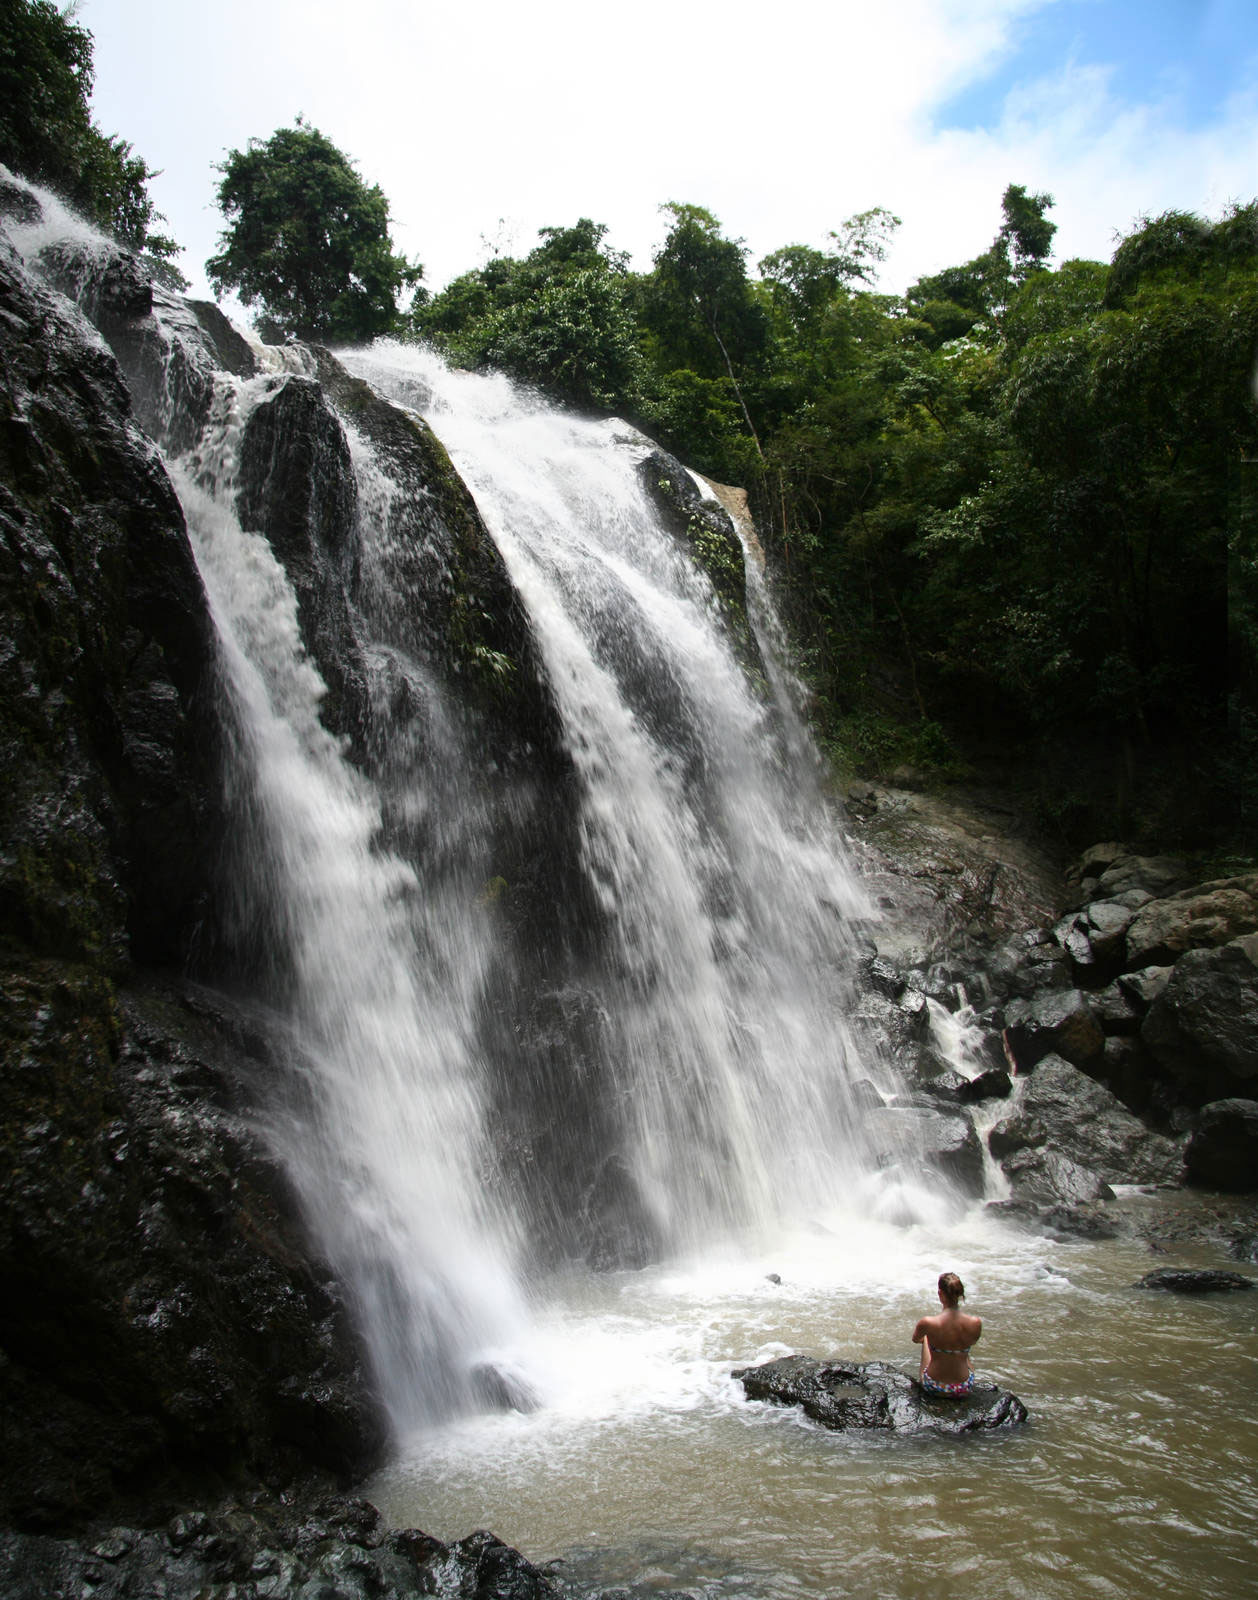 Exploring numerous waterfalls